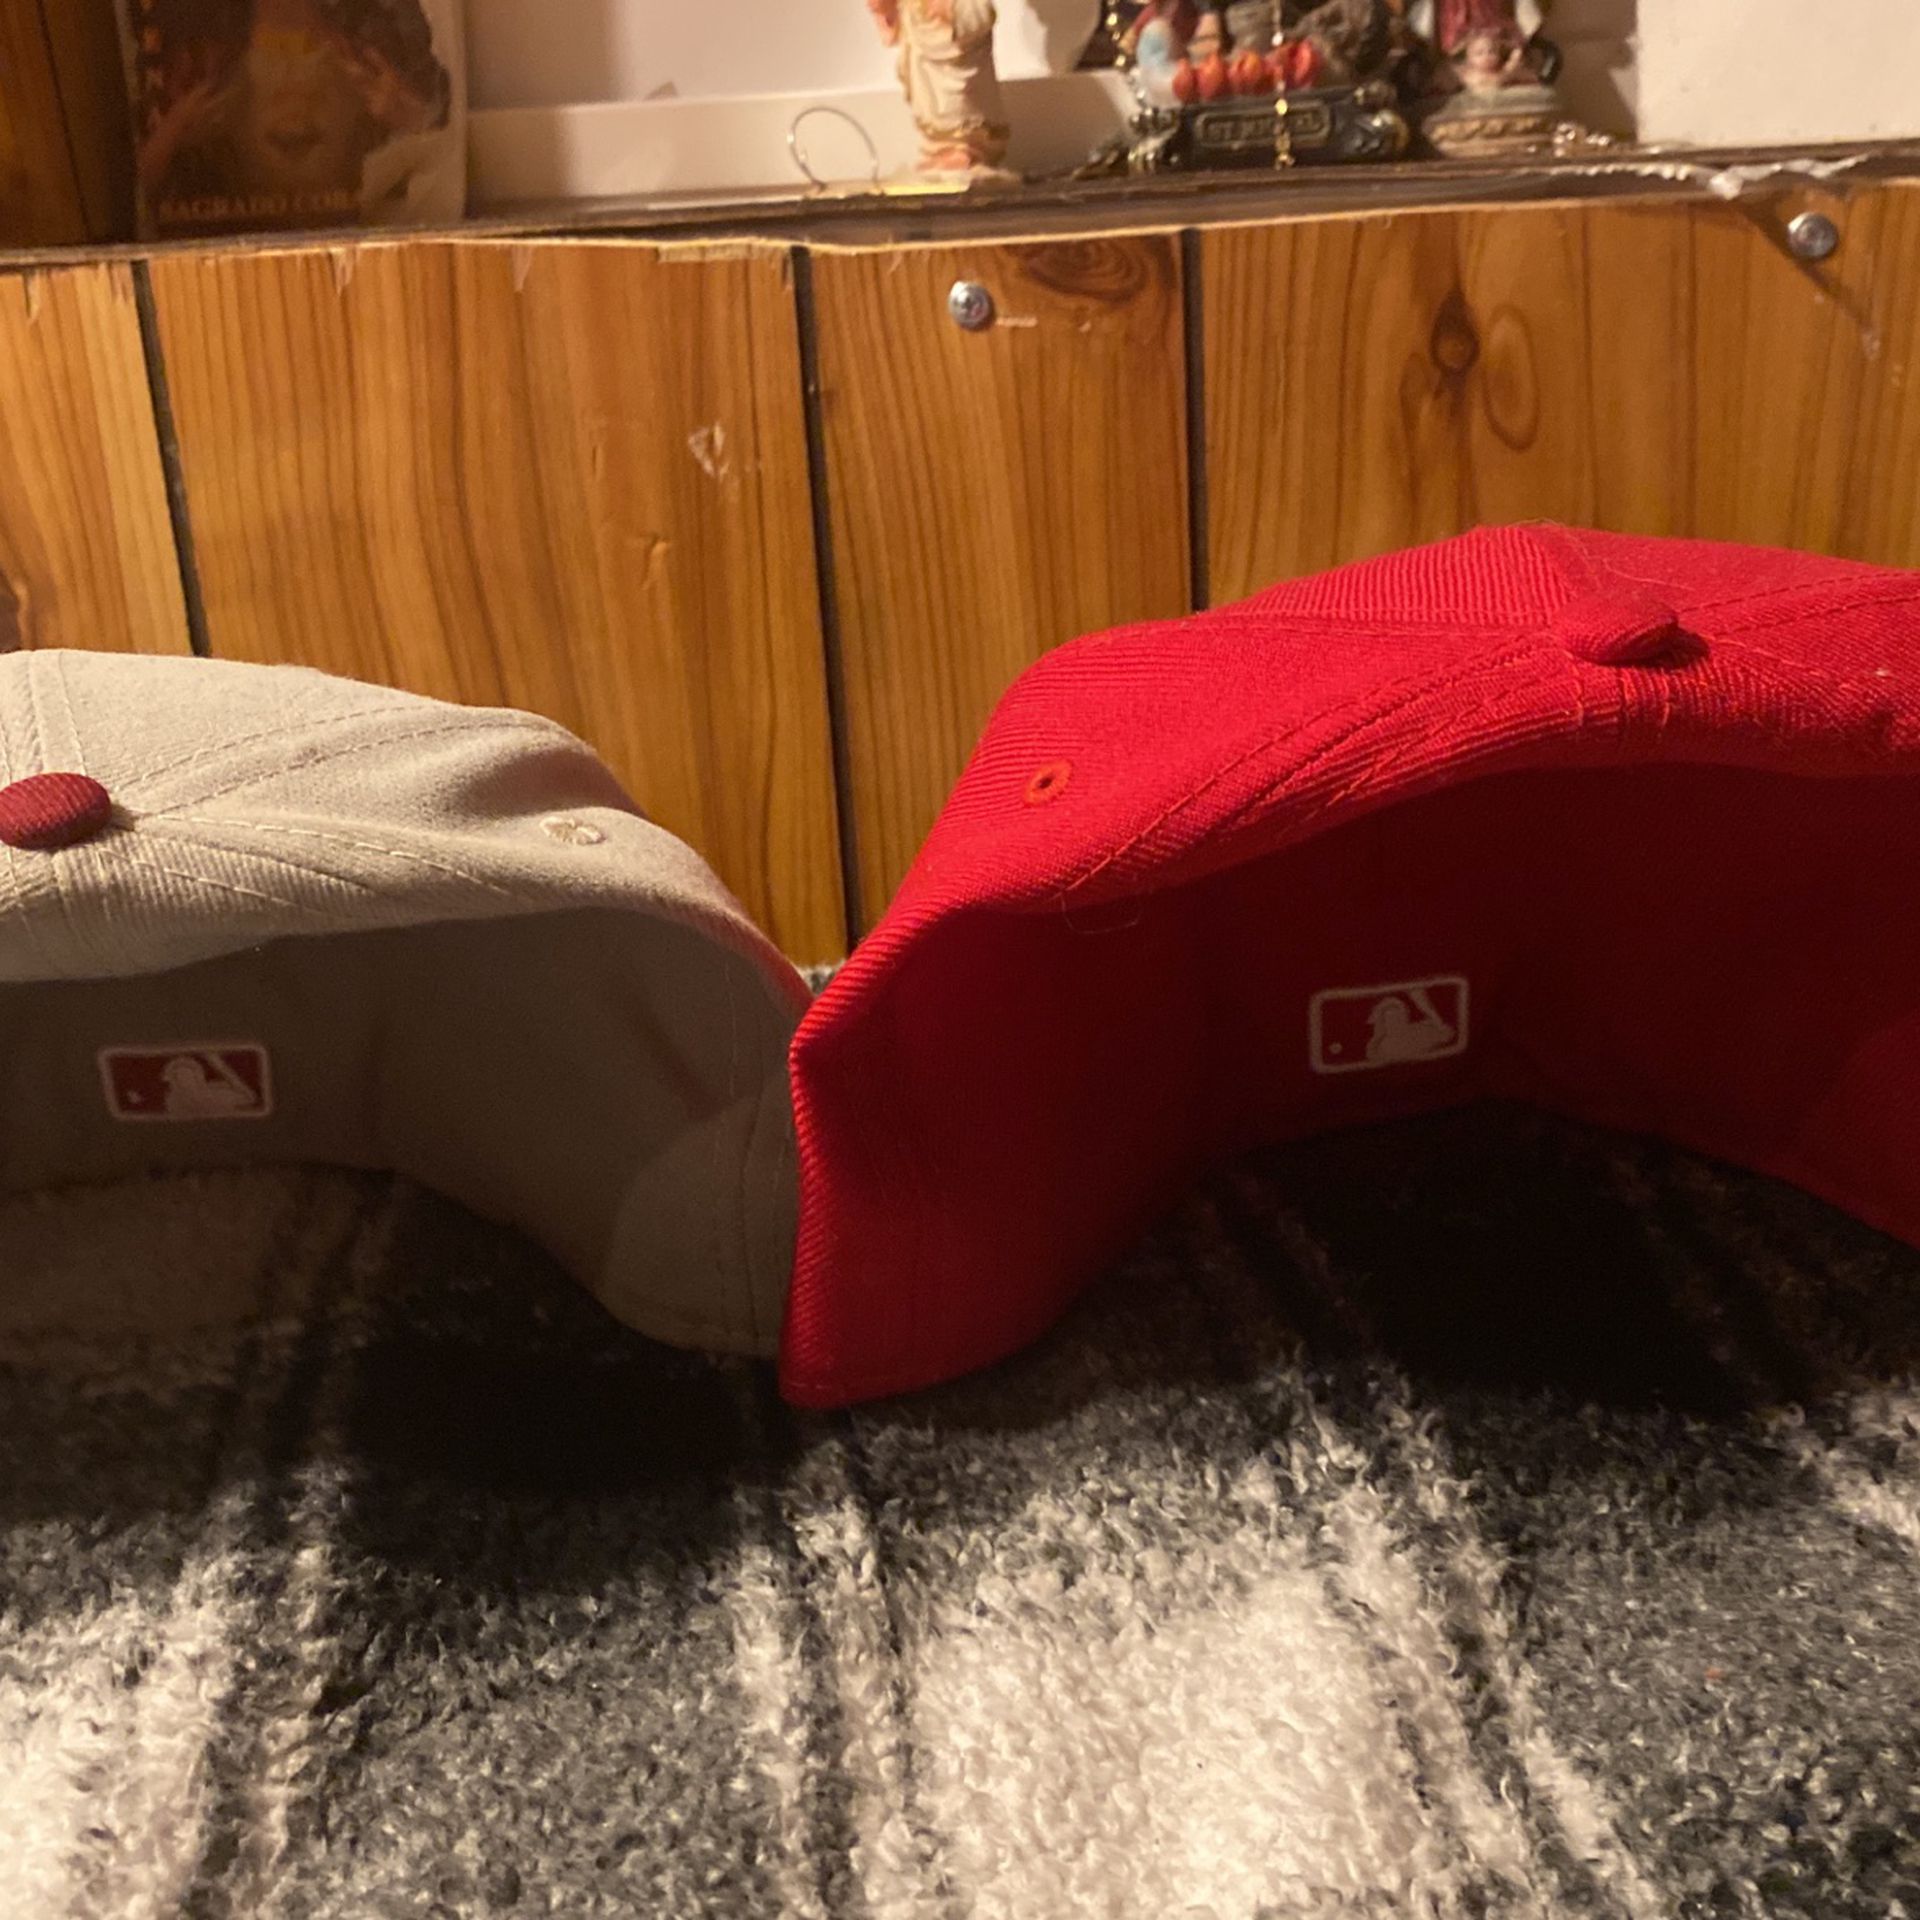 Cheap Baseball Hats